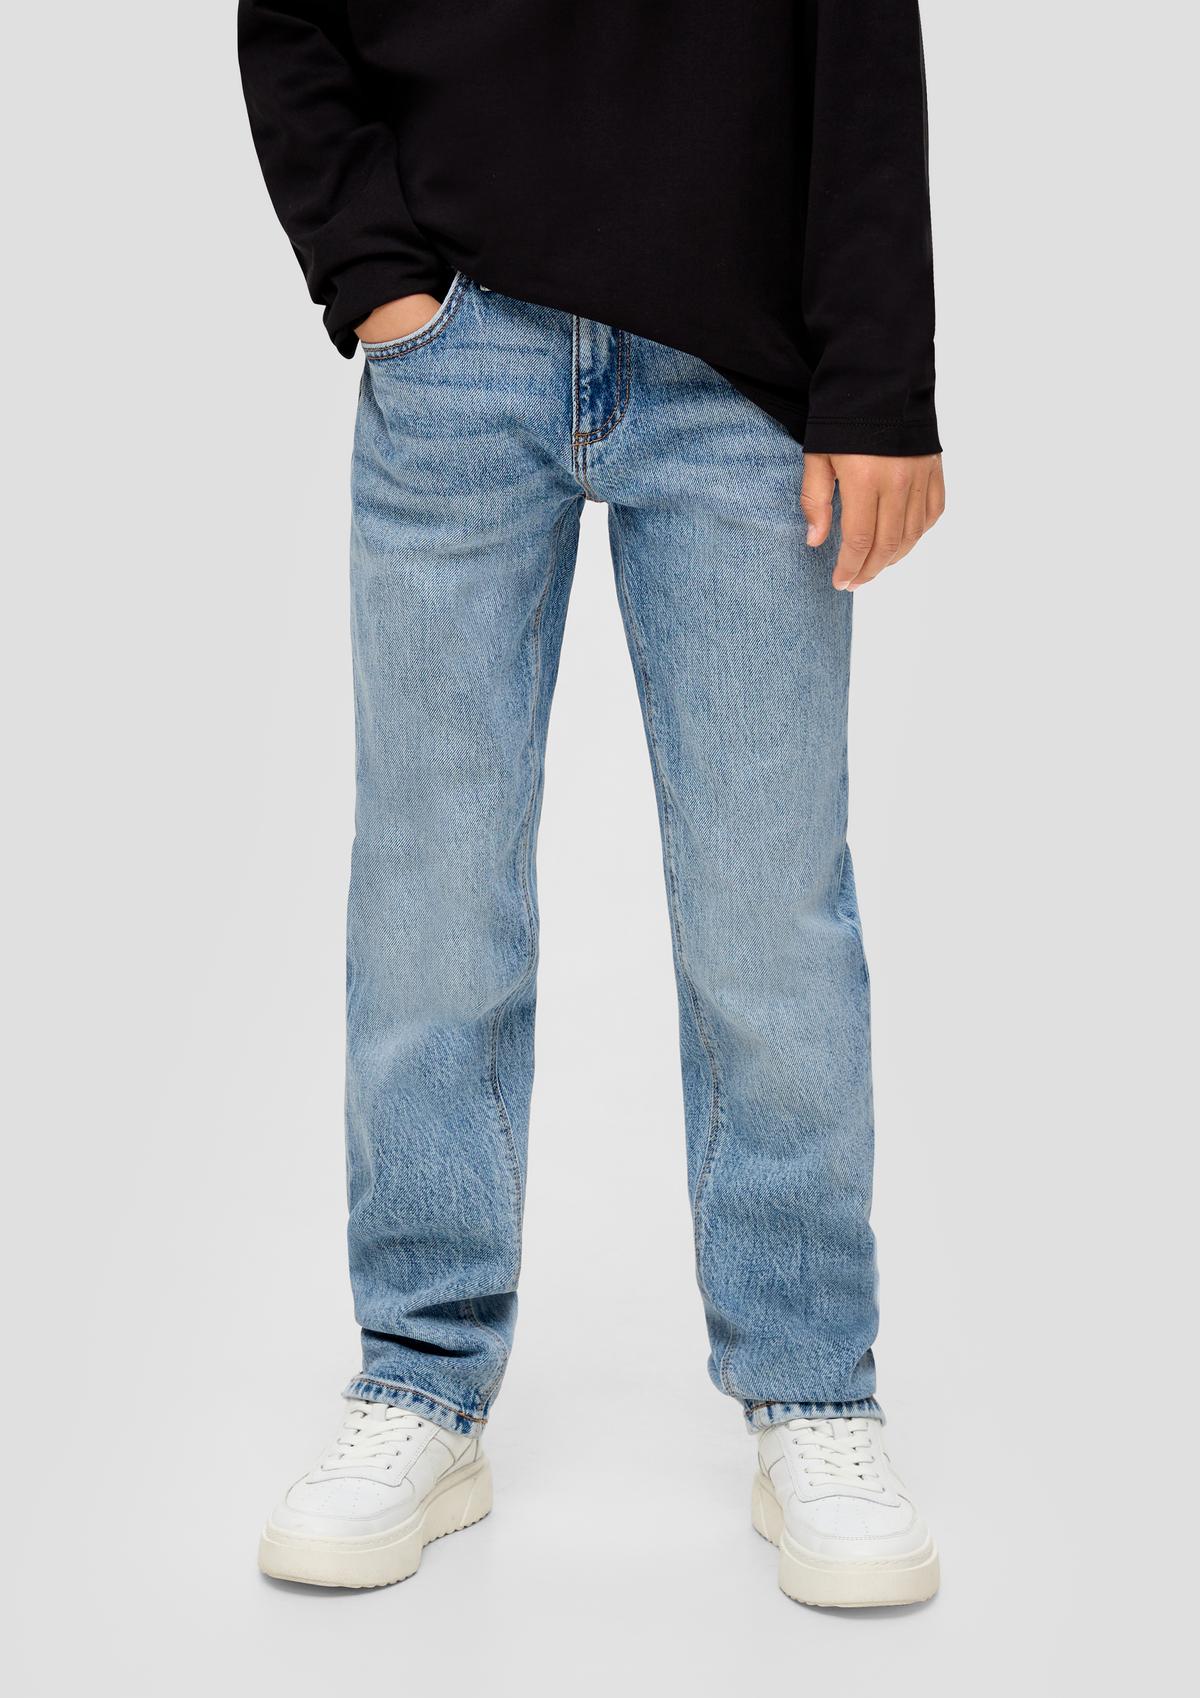 Jeans Pete / regular fit / mid rise / slim leg / dobby denim